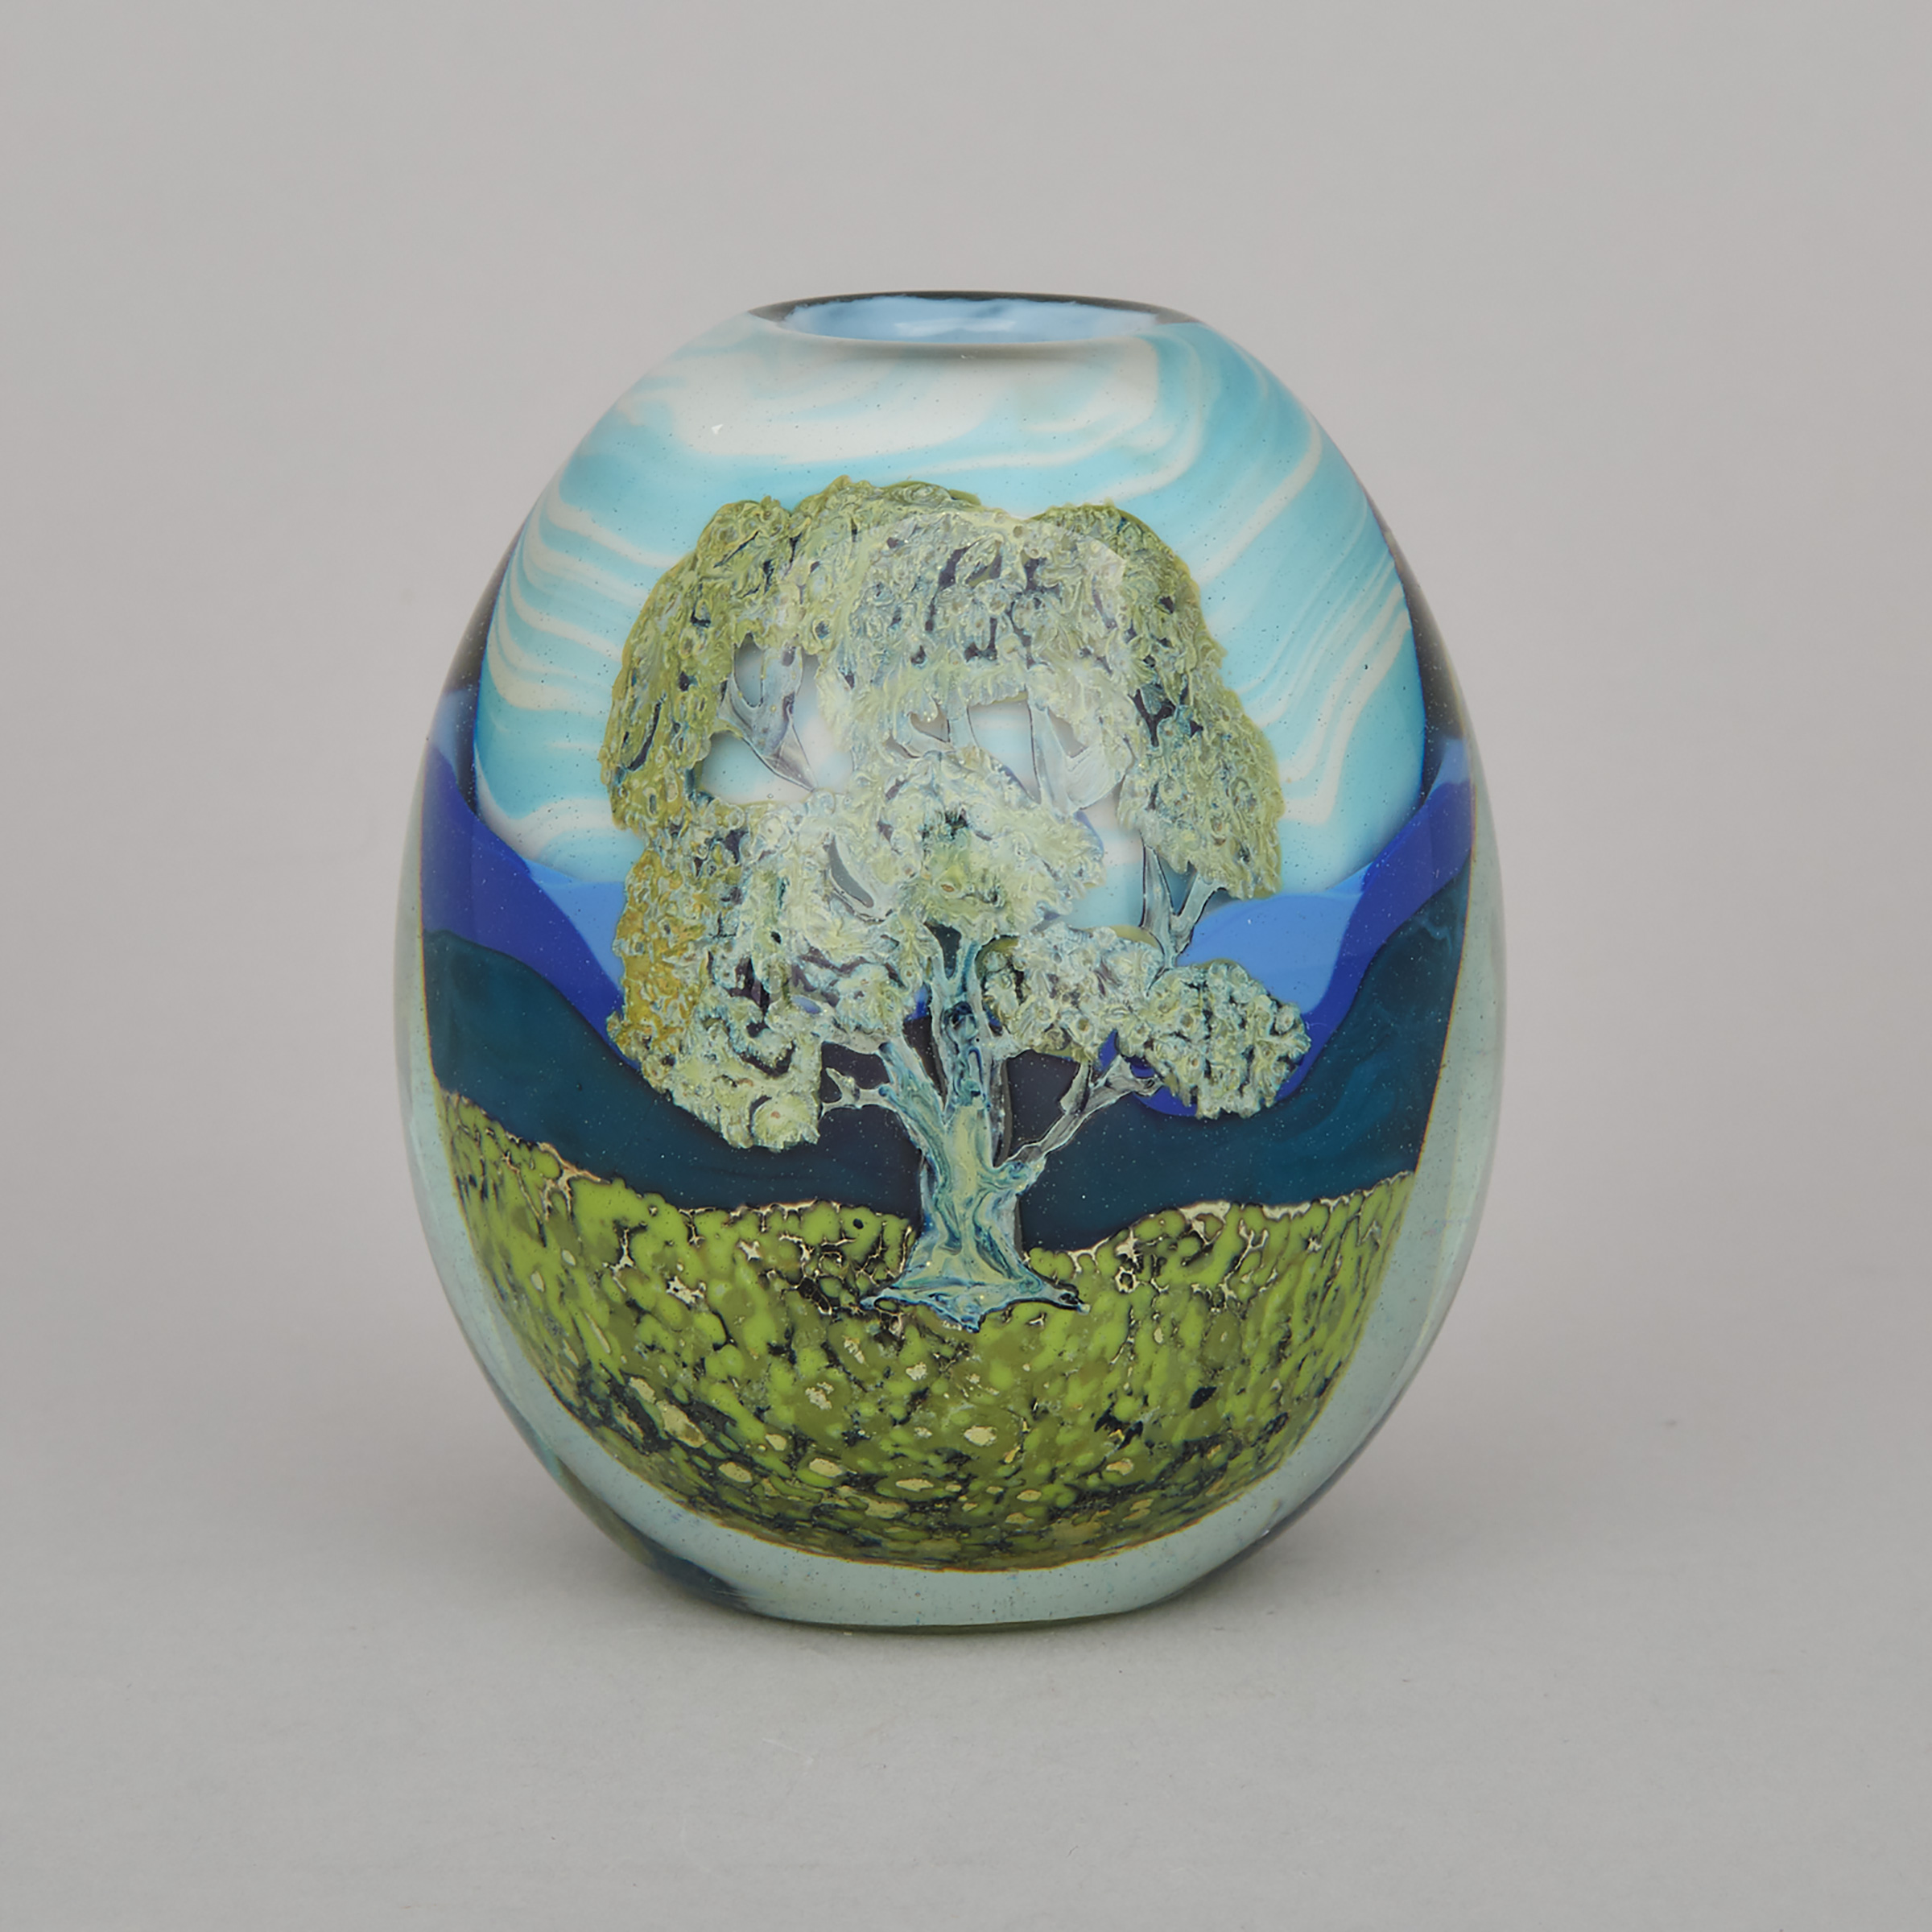 Edward Roman (Canadian, b.1941), Hilltop Trees #1, Internally Decorated Glass Vase, 1981